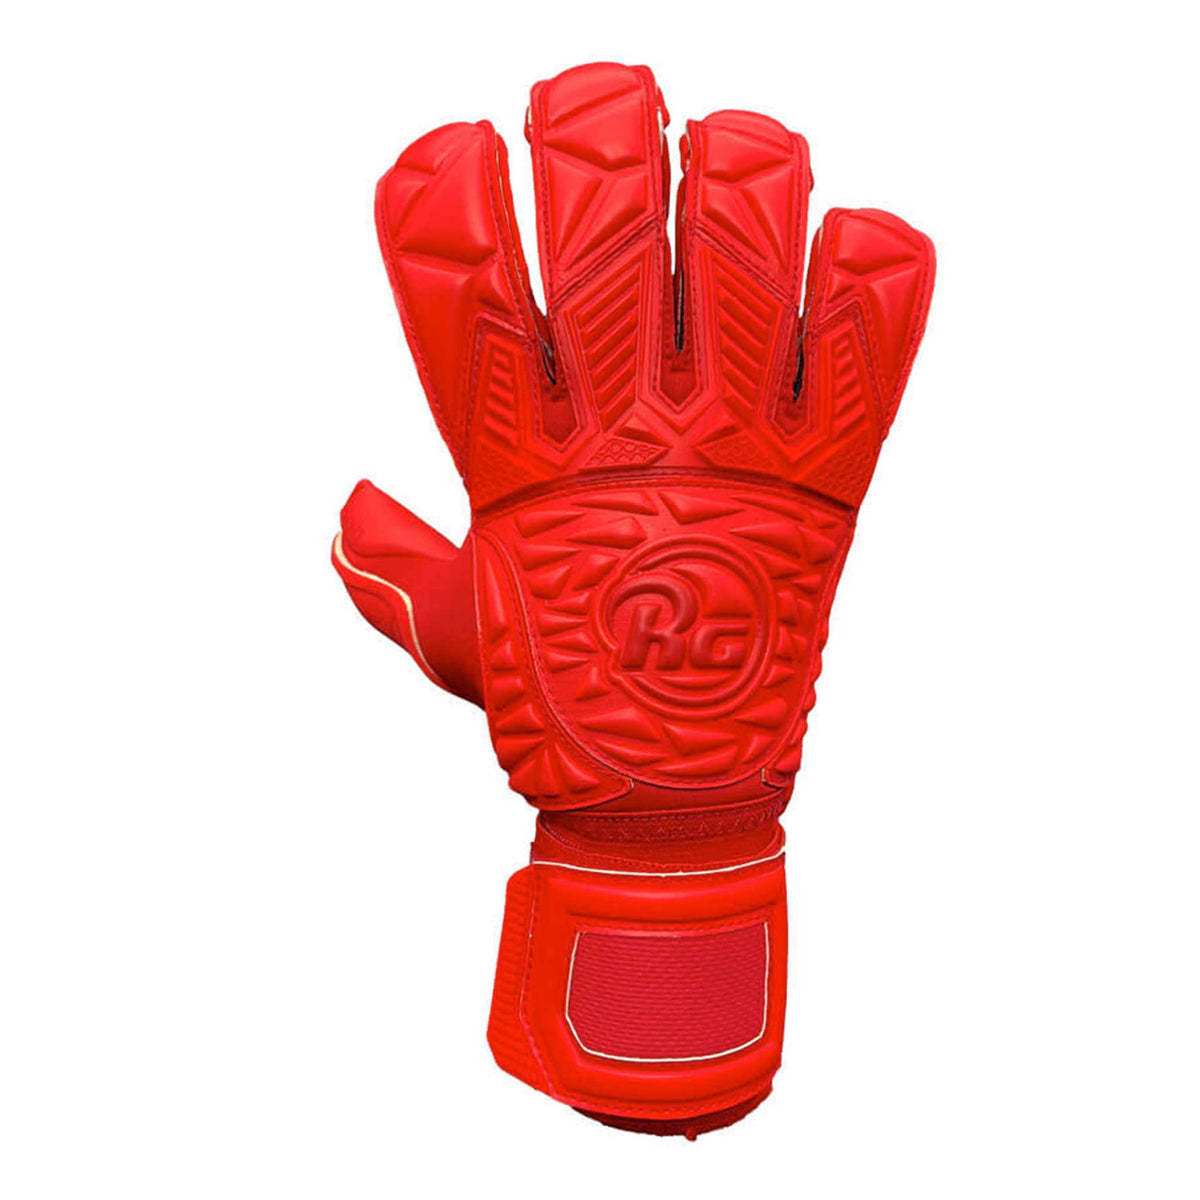 RG Goalkeeper Gloves Snaga Rosso gants de gardien de but de soccer - Rouge